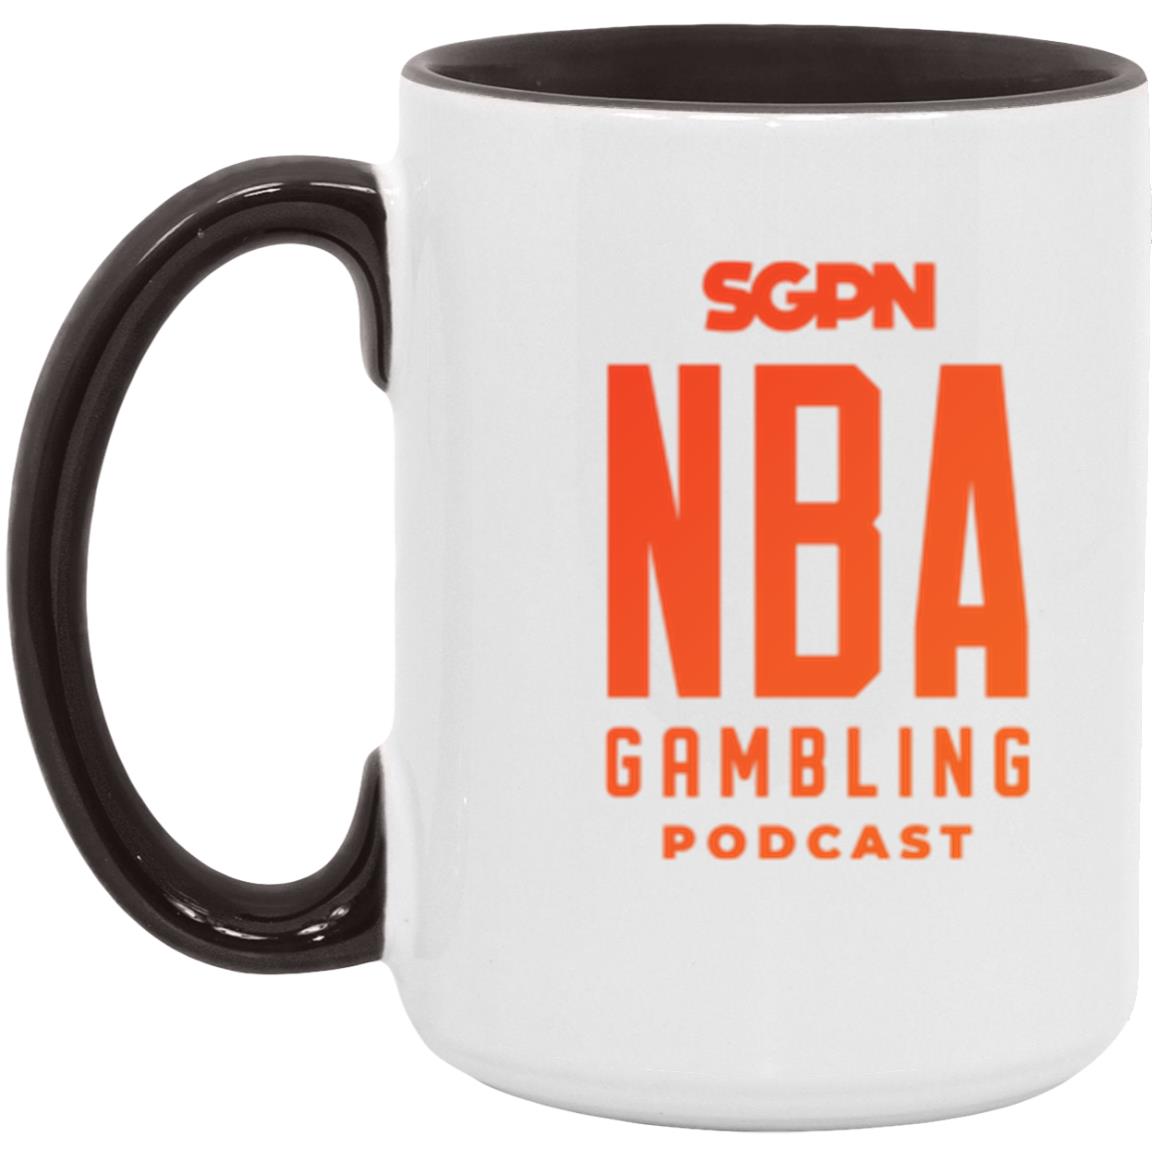 NBA Gambling Podcast 15 oz. Accent Mug